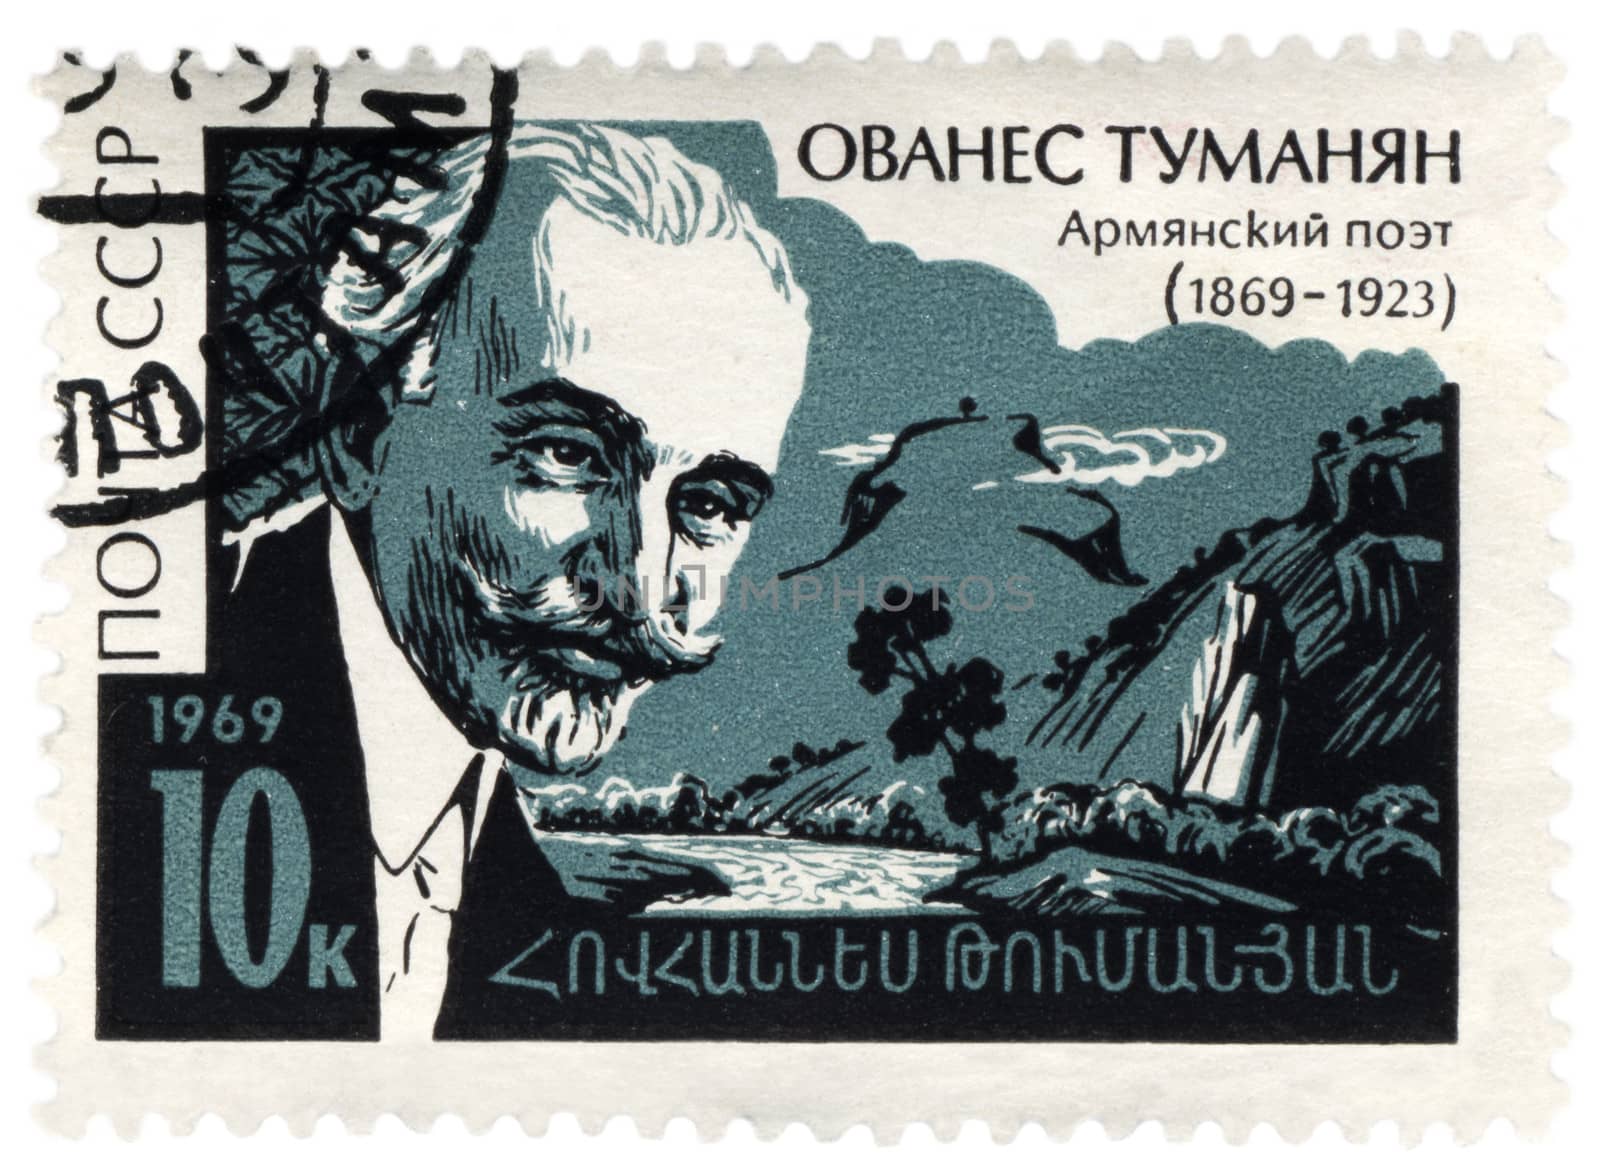 Armenian poet Ovanes Tumanyan by wander